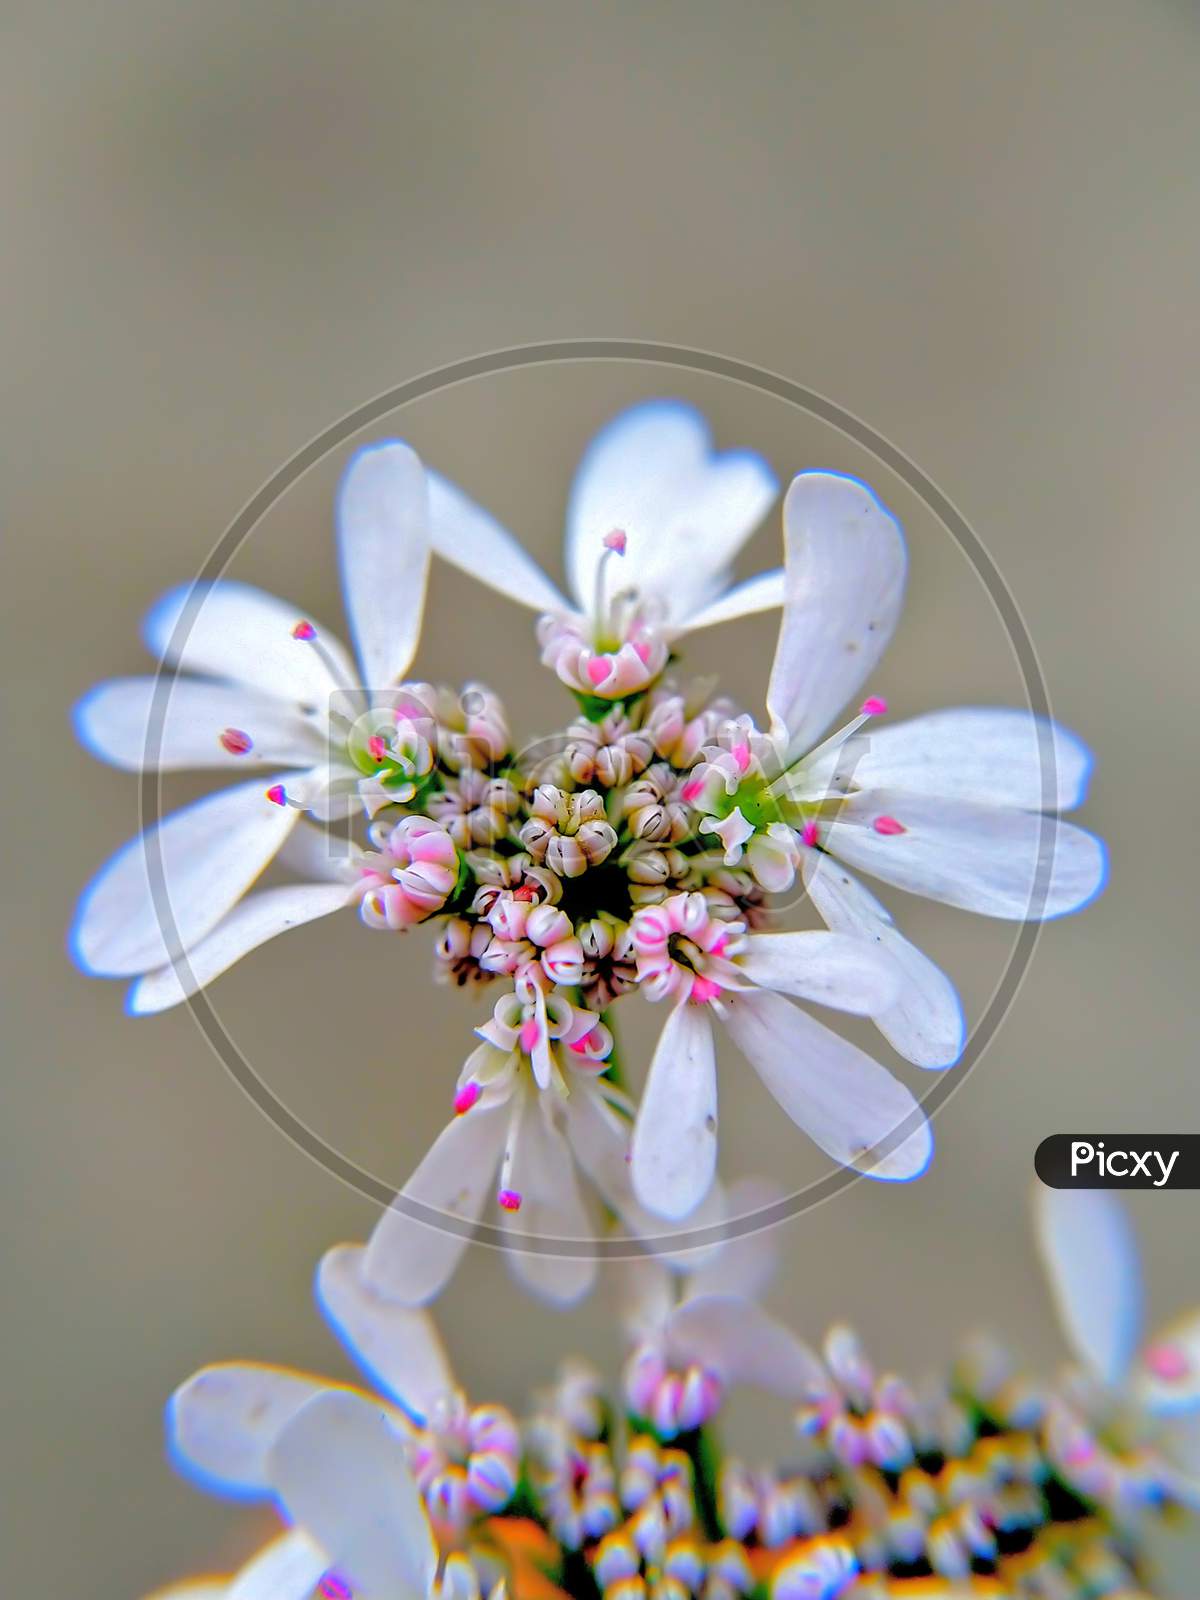 White flower close up.